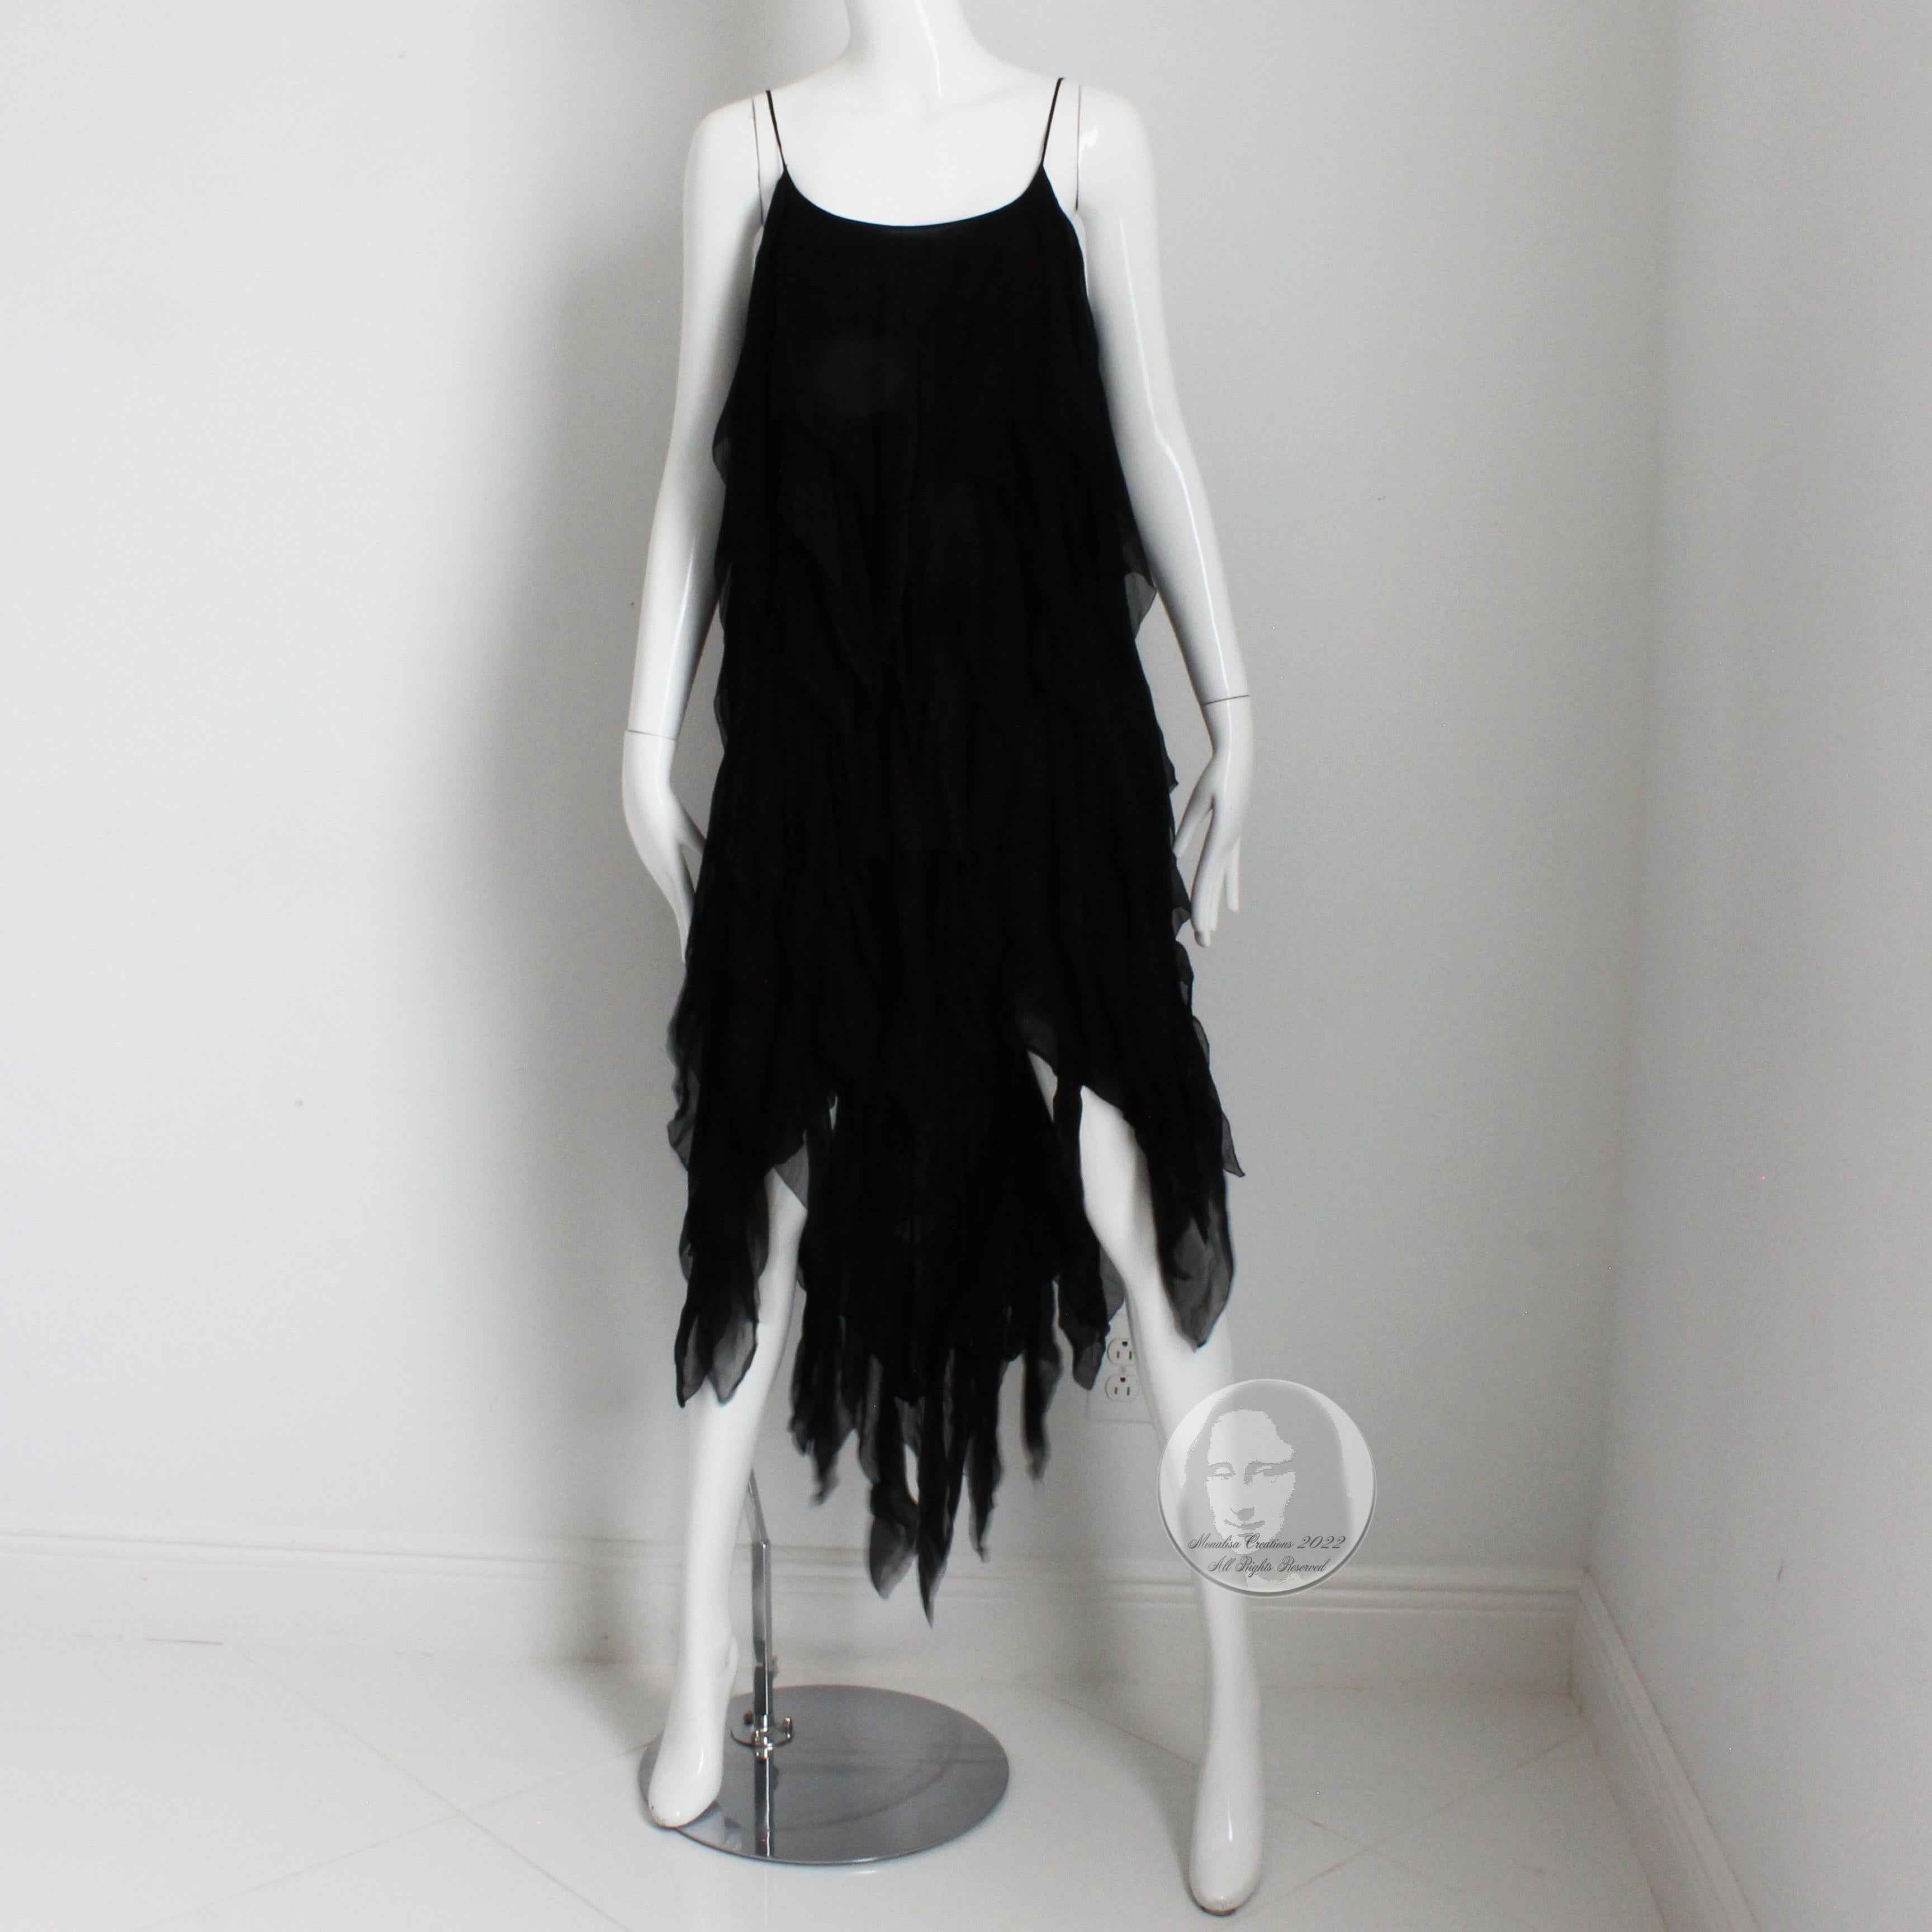 Chanel Dress Black Silk Chiffon Panels Layers LBD Flapper Style Rare 70s  2